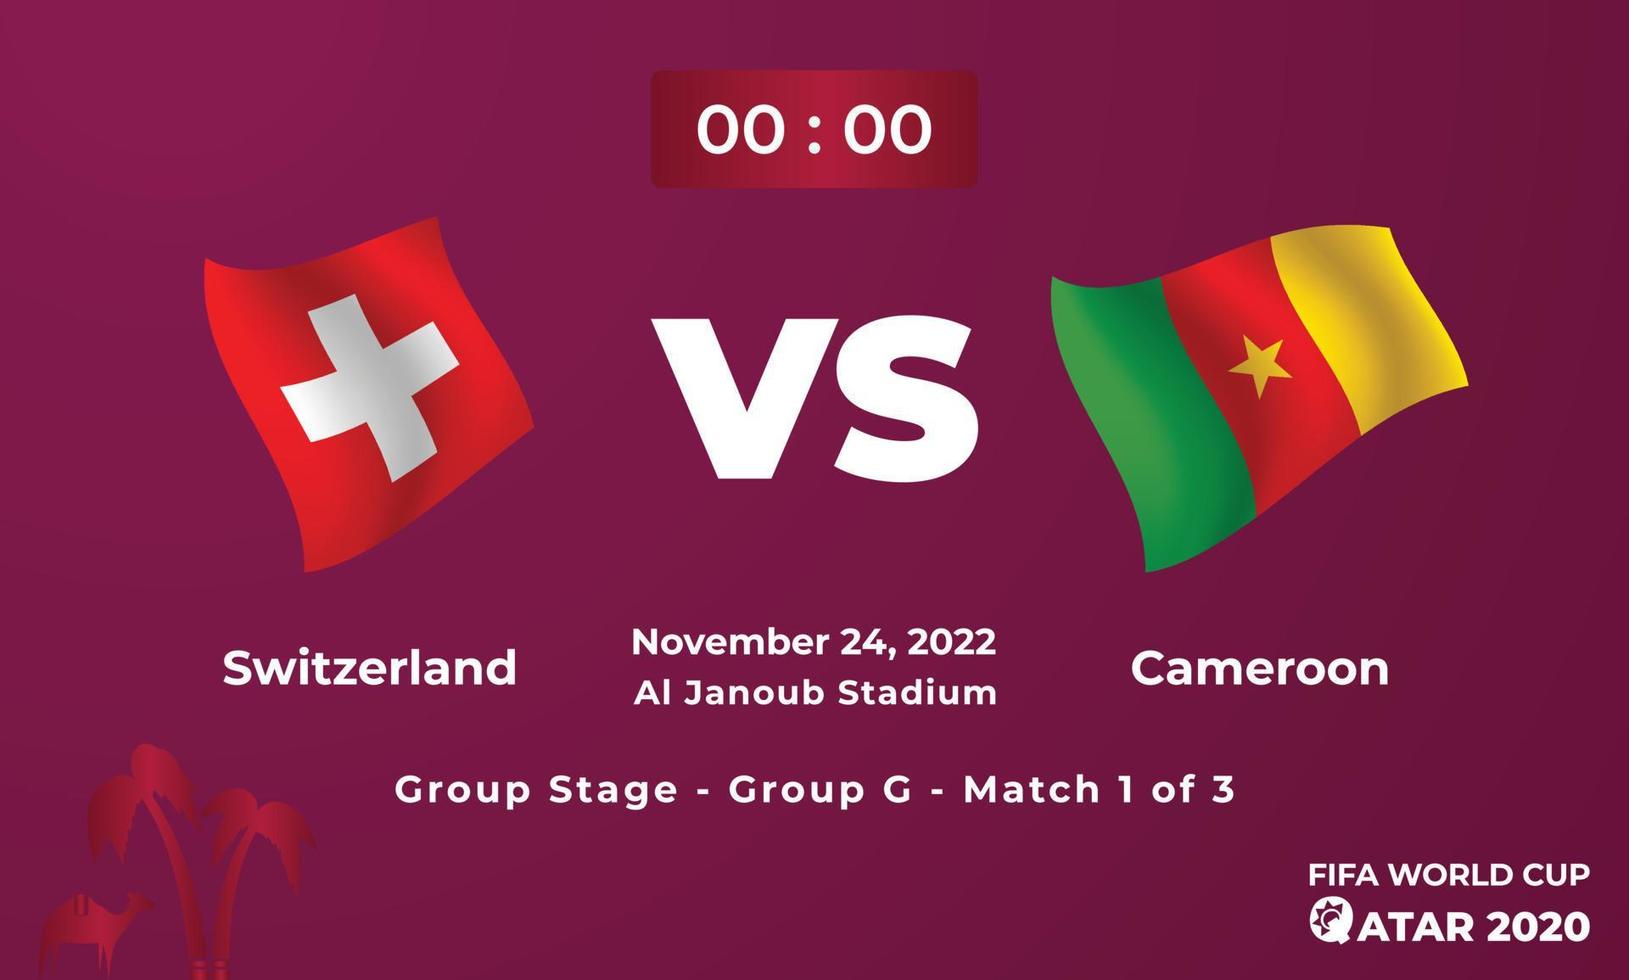 Switzerland VS Cameroon Football MatchTemplate, FIFA World Cup in Qatar 2022 vector